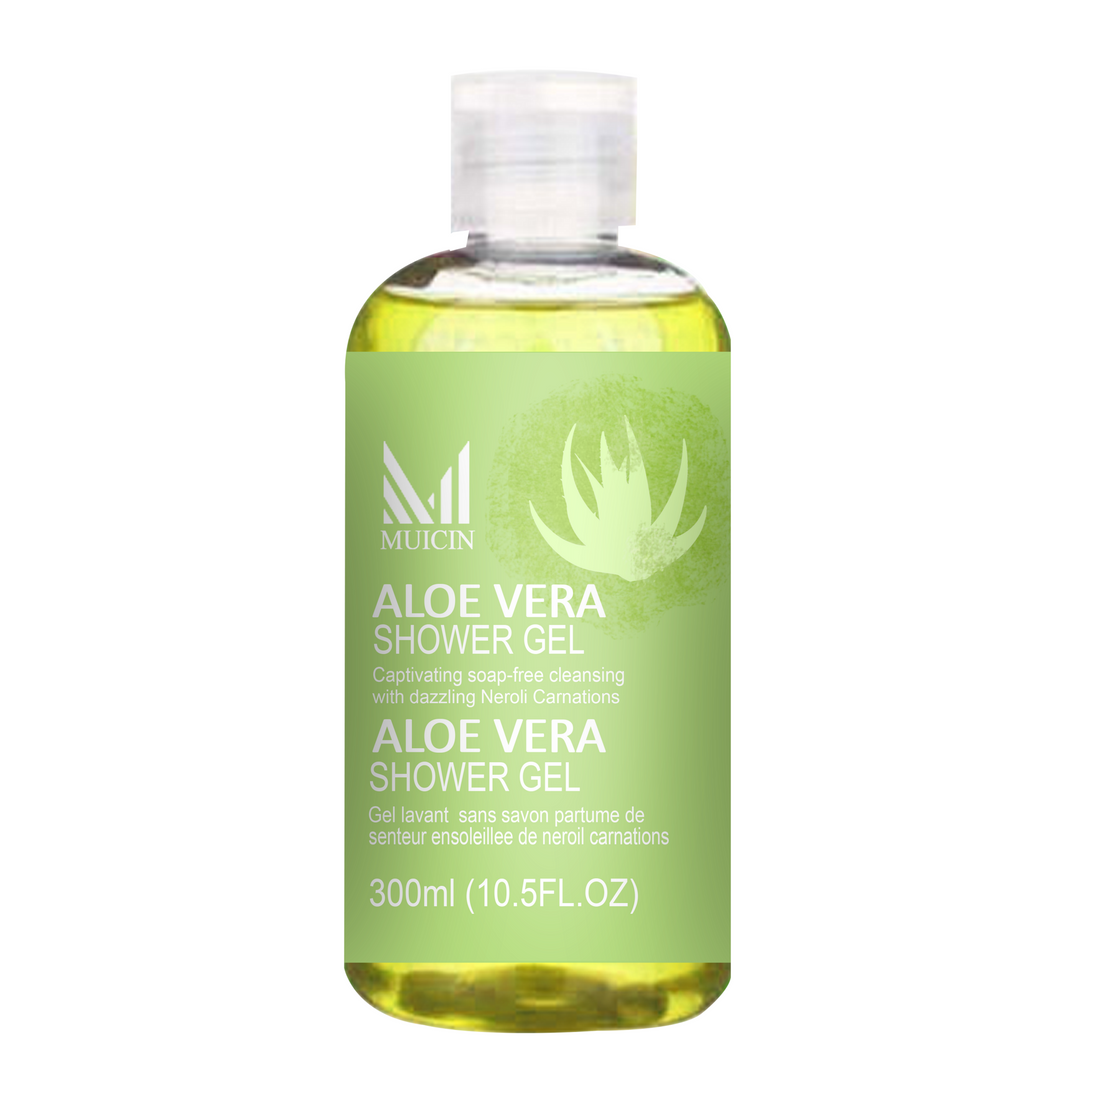 Aloe Vera Shower Gel - 300ml